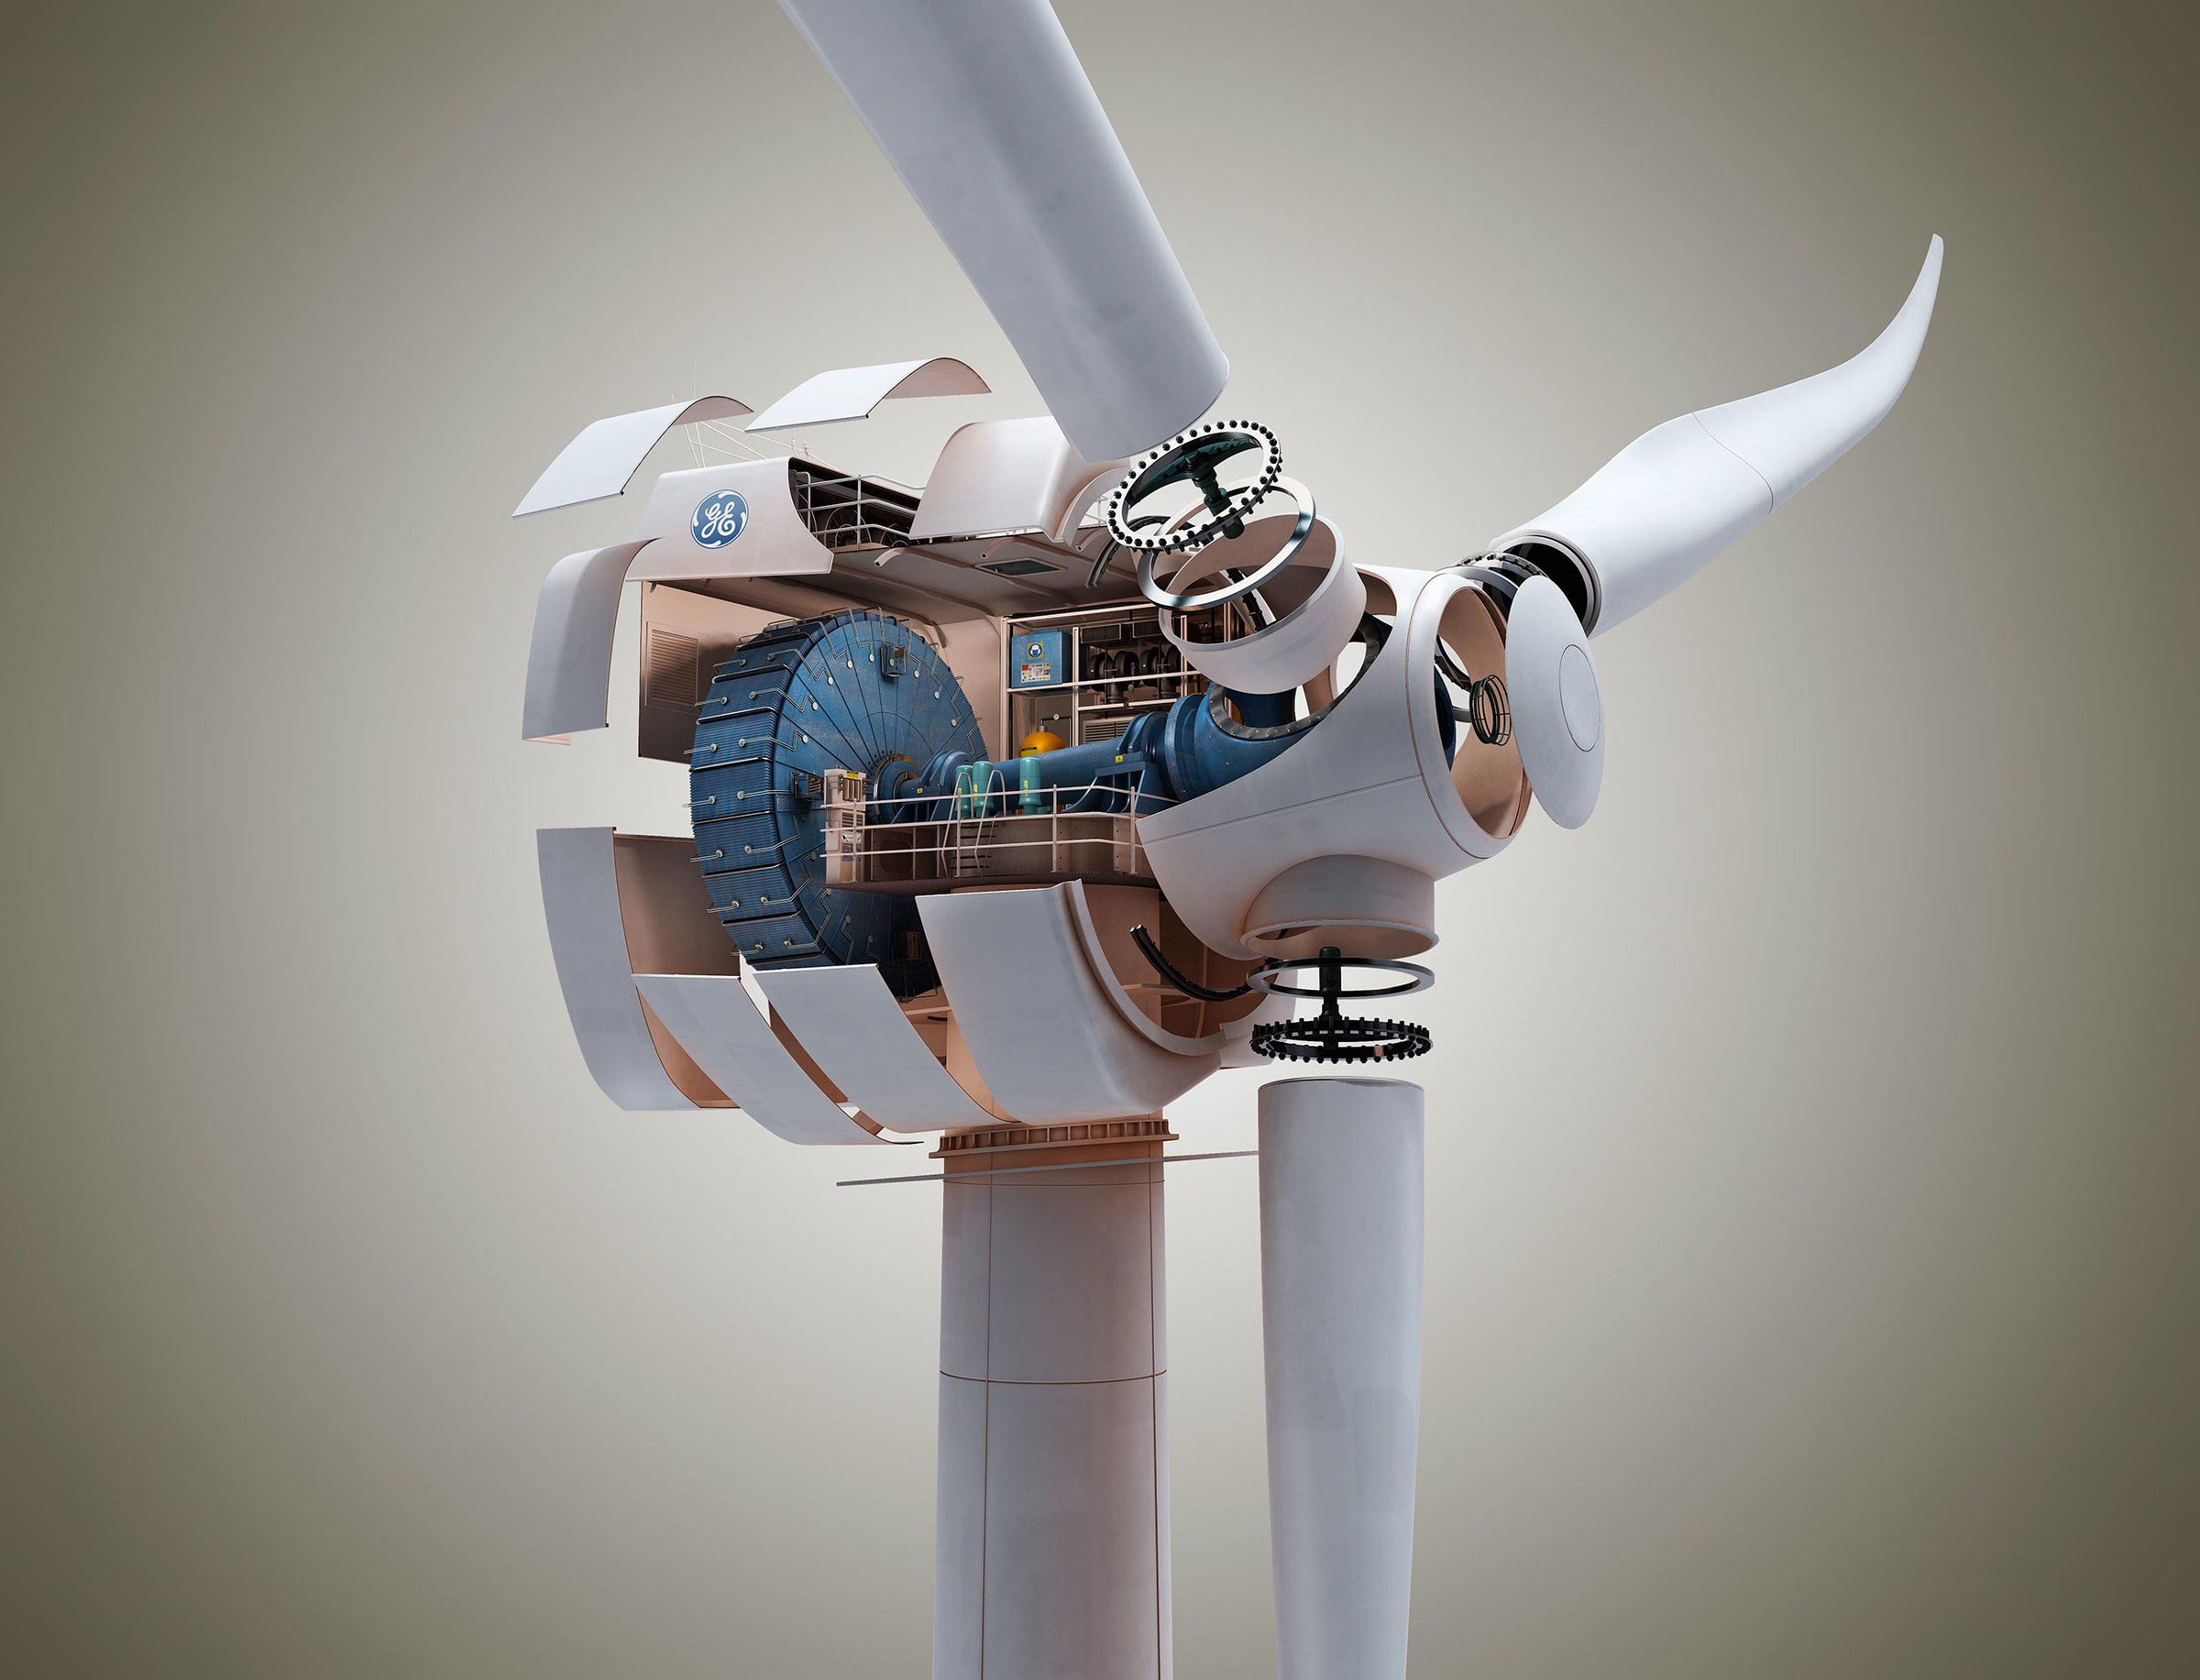 Wind turbine cutaway